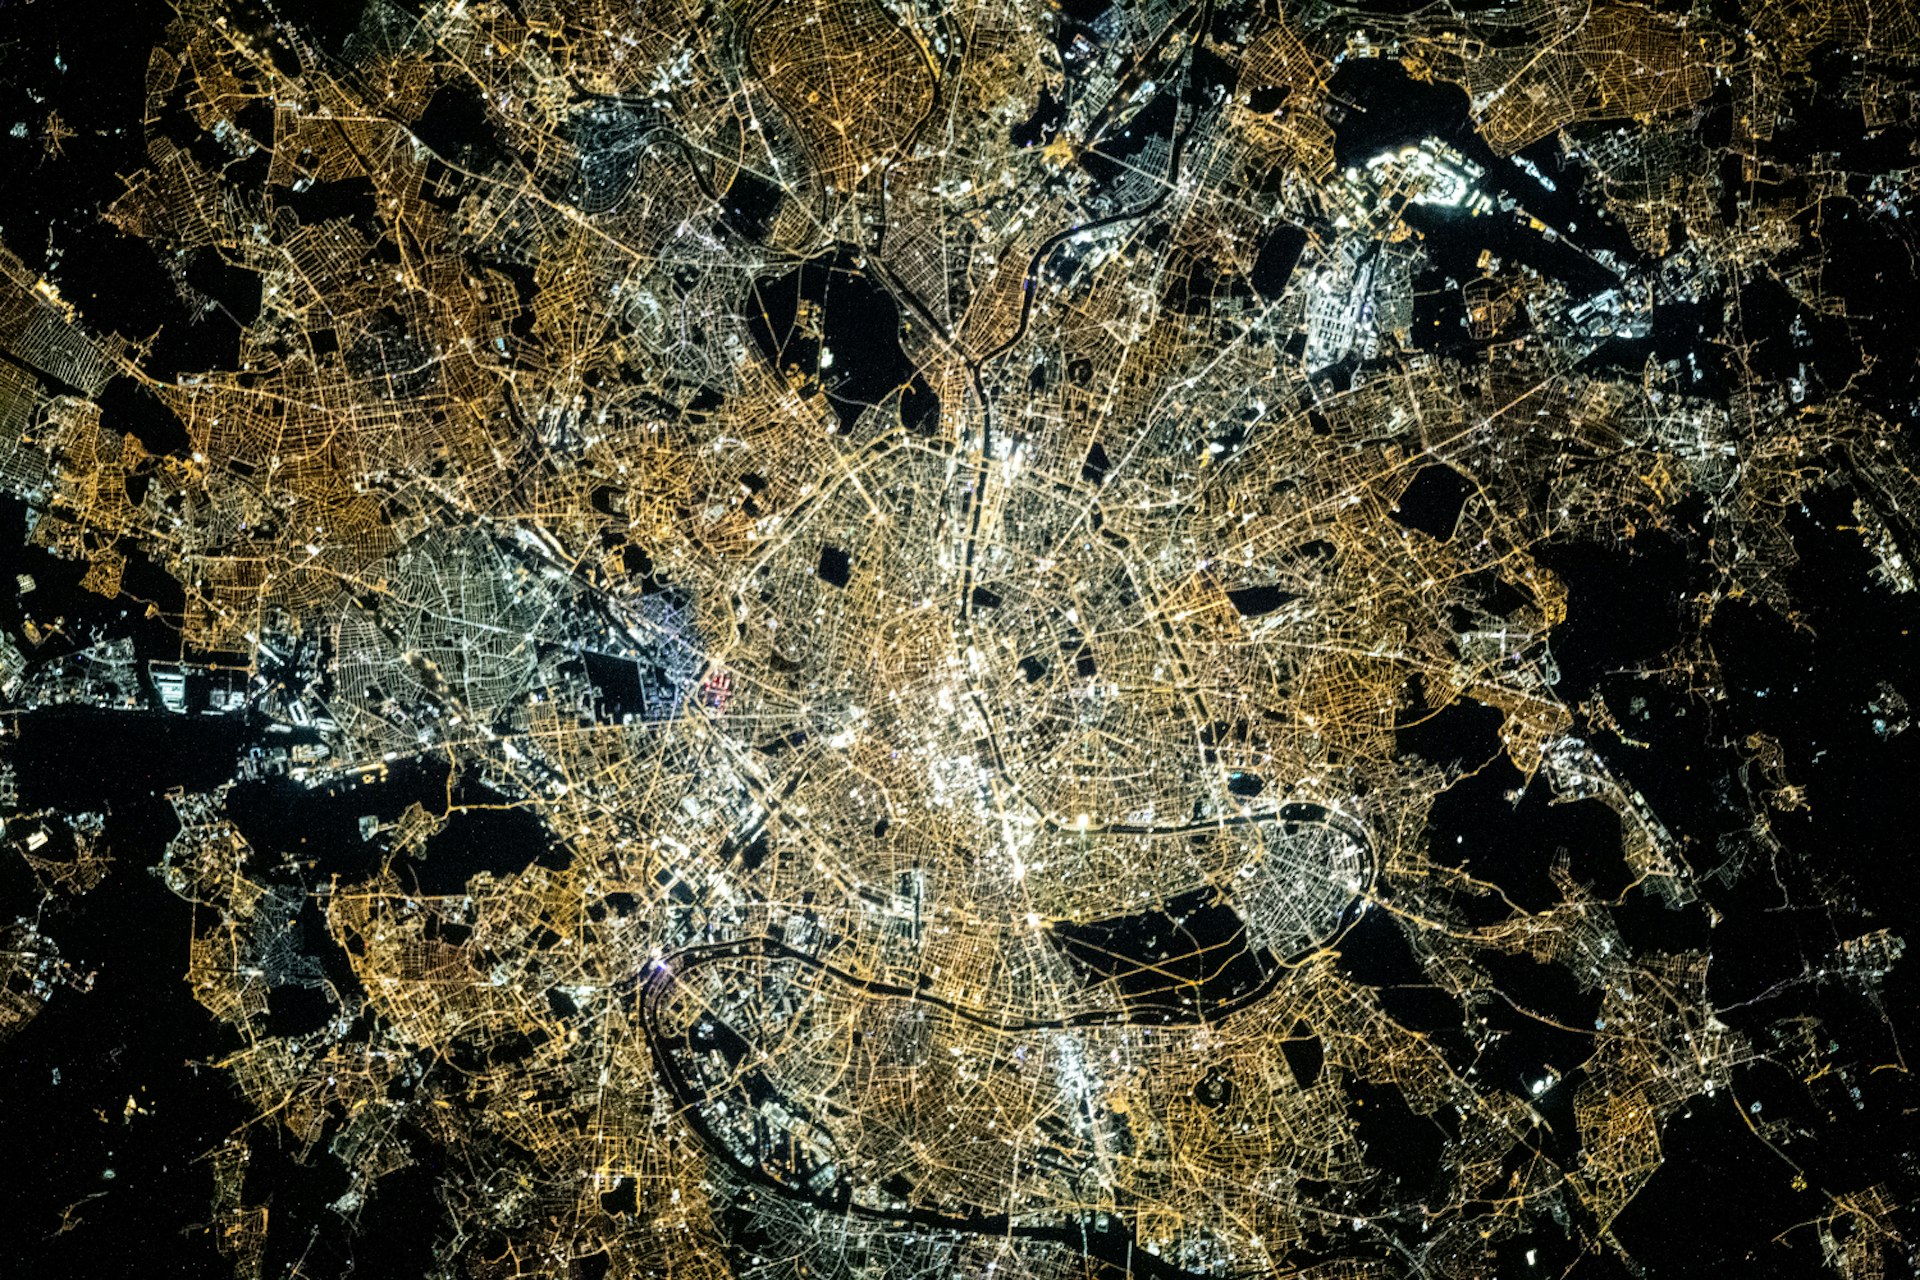 A satellite image of Paris by night